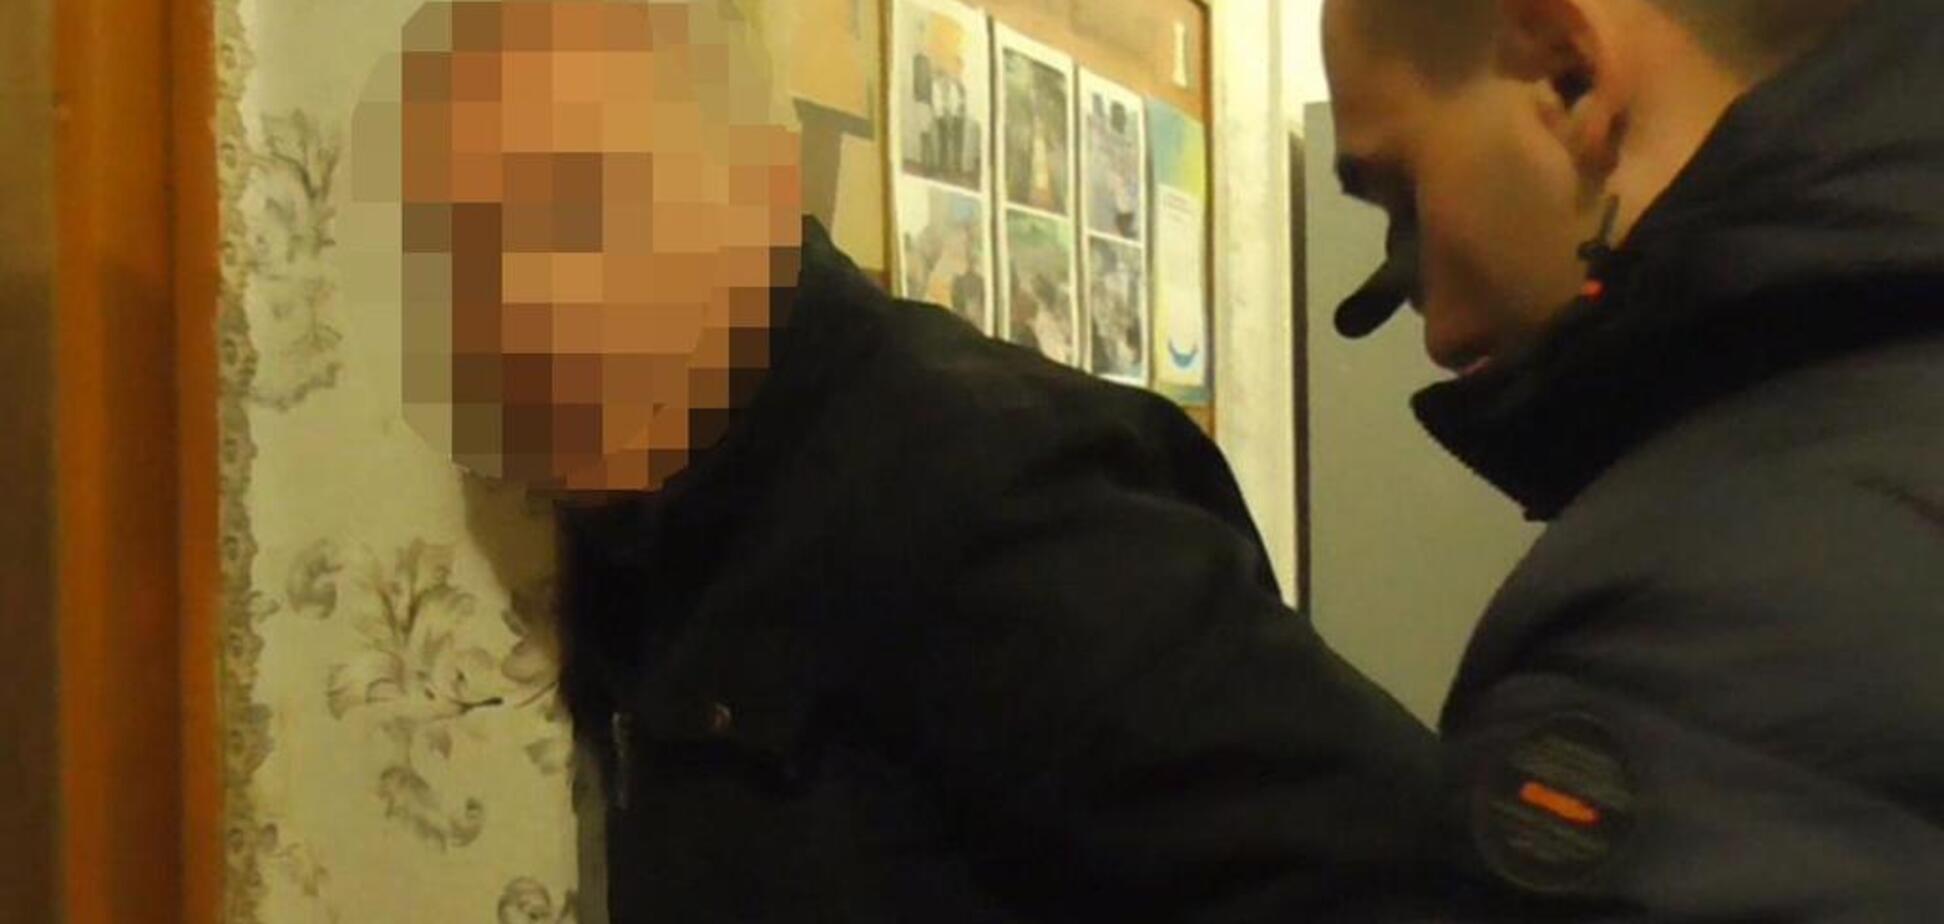  На Житомирщине тренер развращал девочку: фото и видео